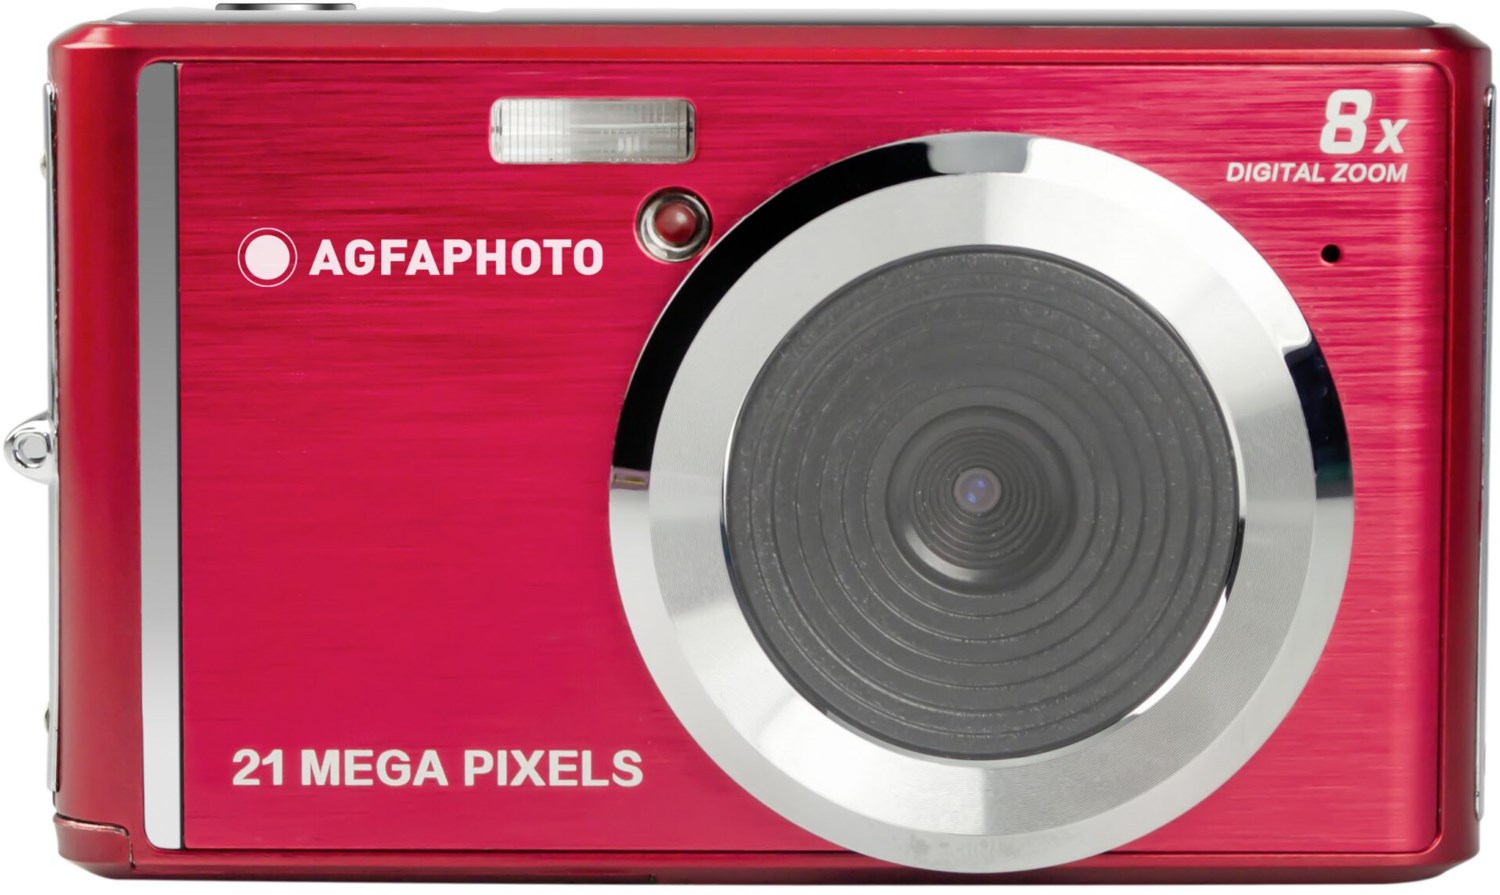 Realishot DC5200 Digitale Kompaktkamera rot von Agfaphoto